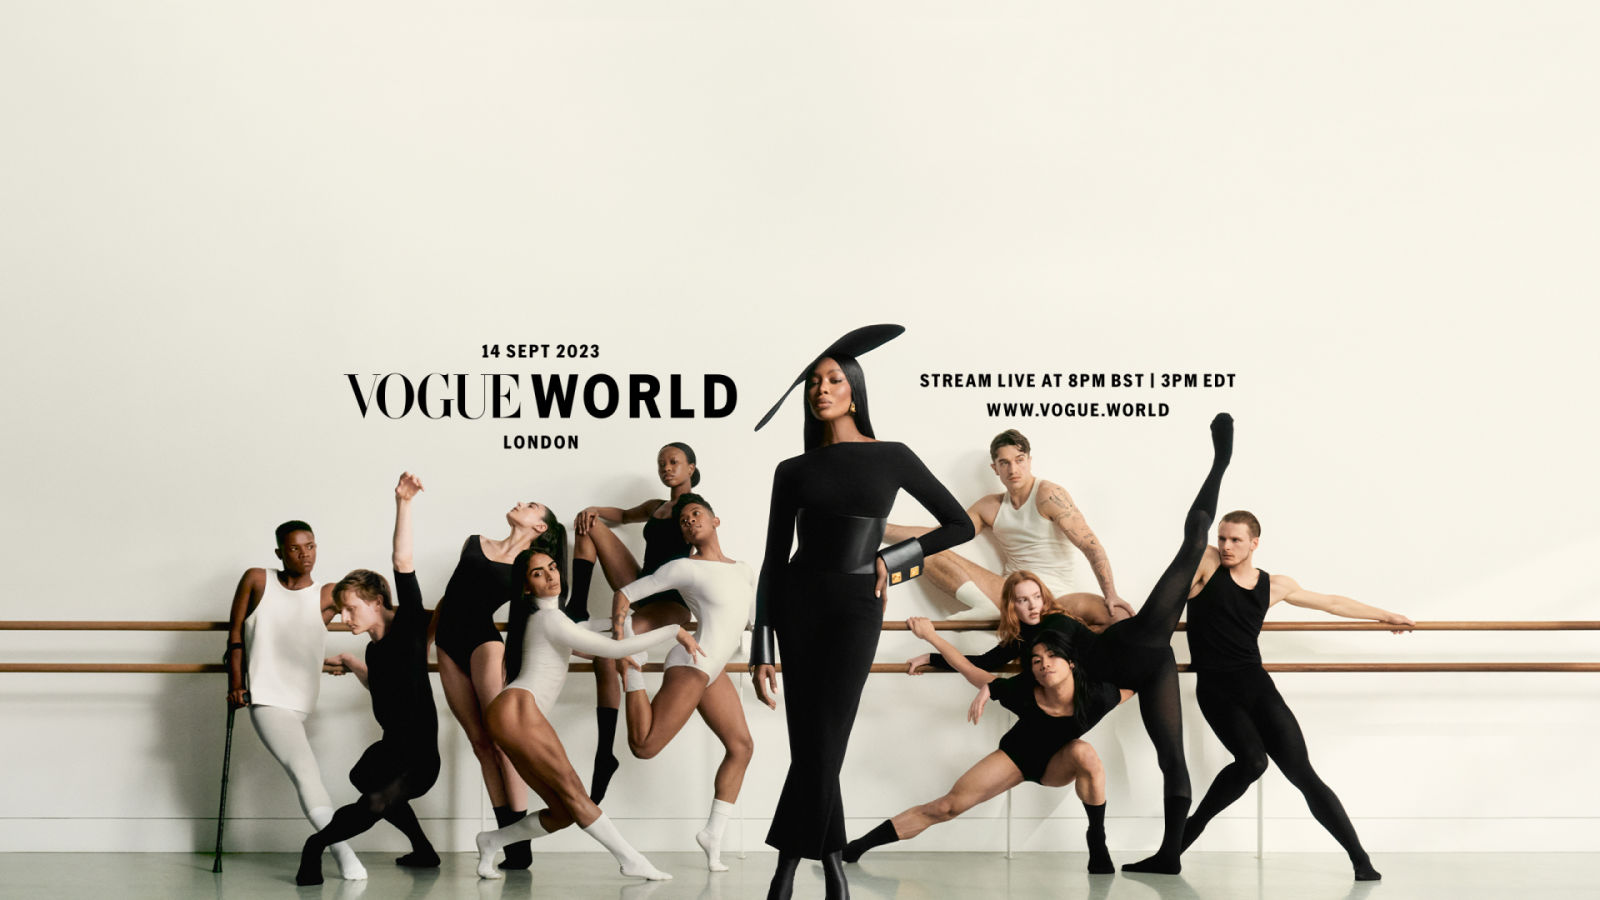 Rewatch | The Vogue World: London livestream